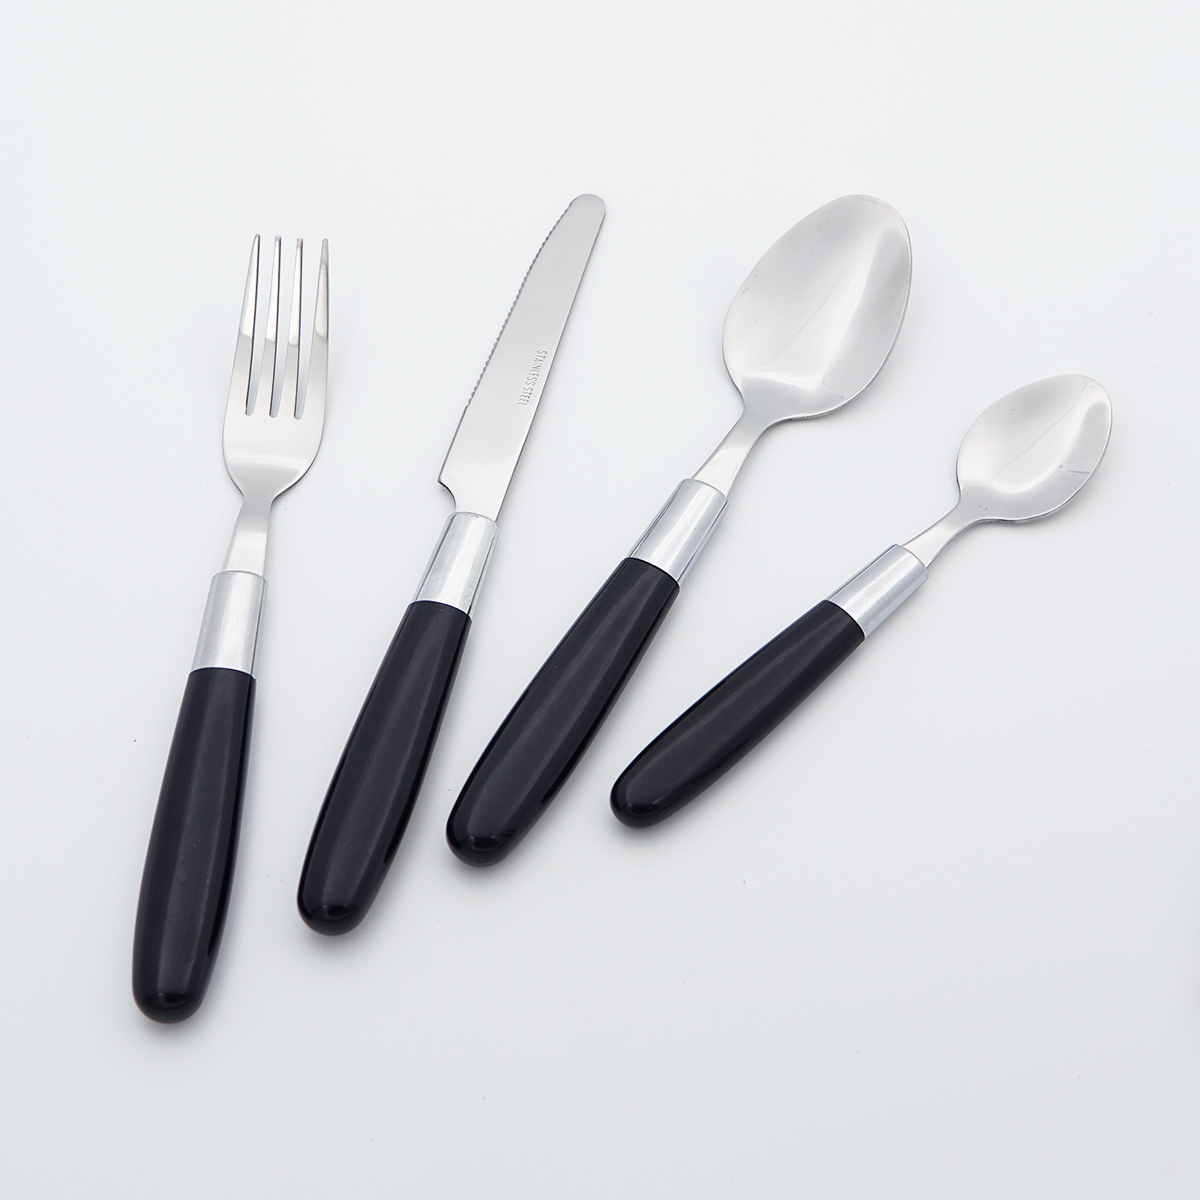 Wholesale Stainless Steel Cutlery Food Grade Flatware Plastic Handle Mirror Polish Silverware Set for Restaurant Hotel